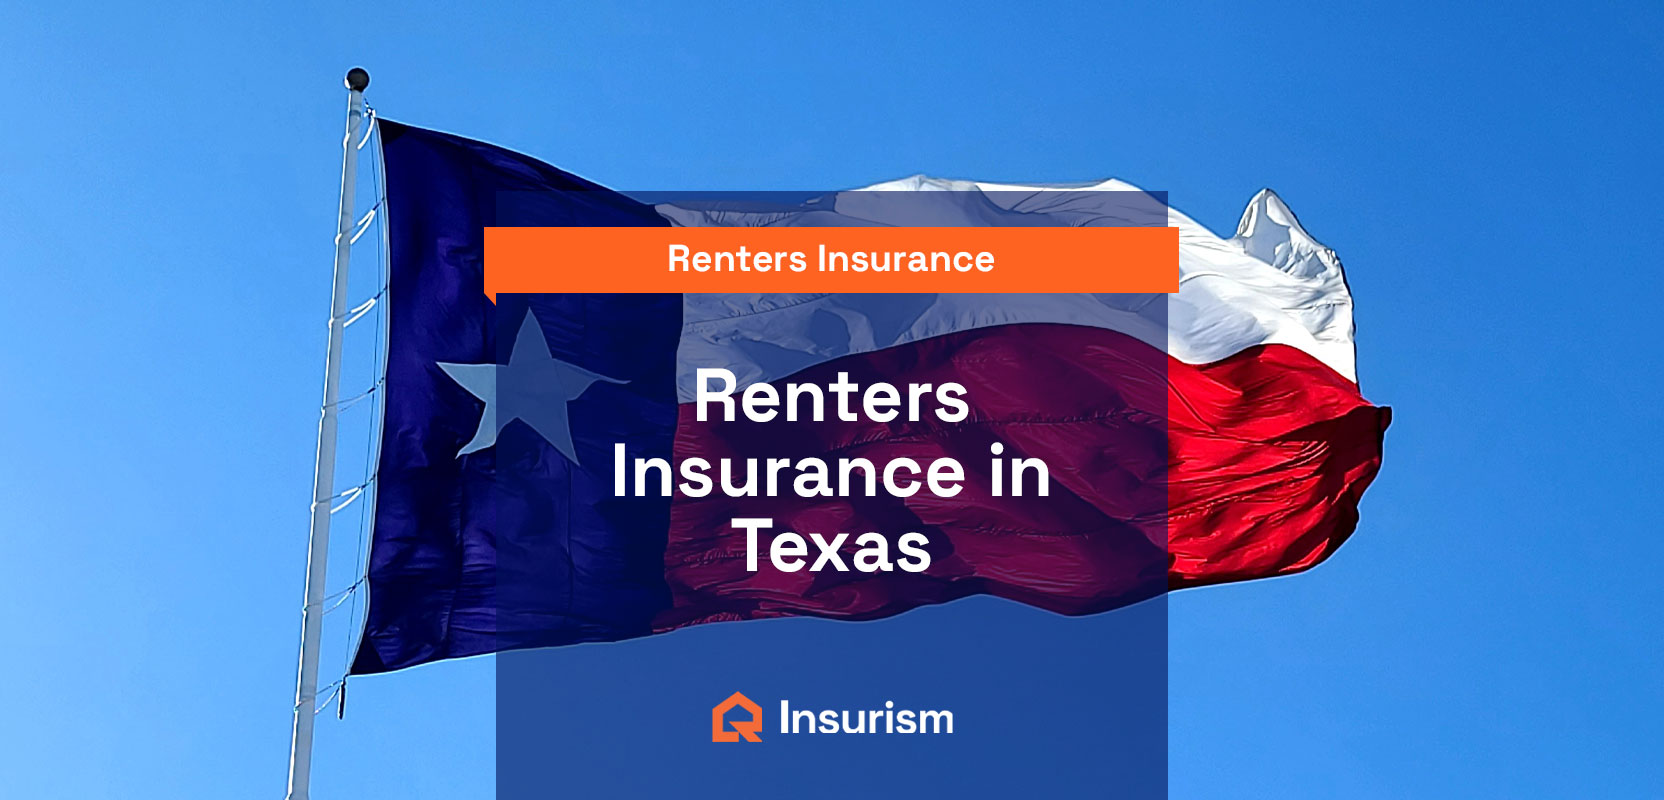 Renters insurance in Texas